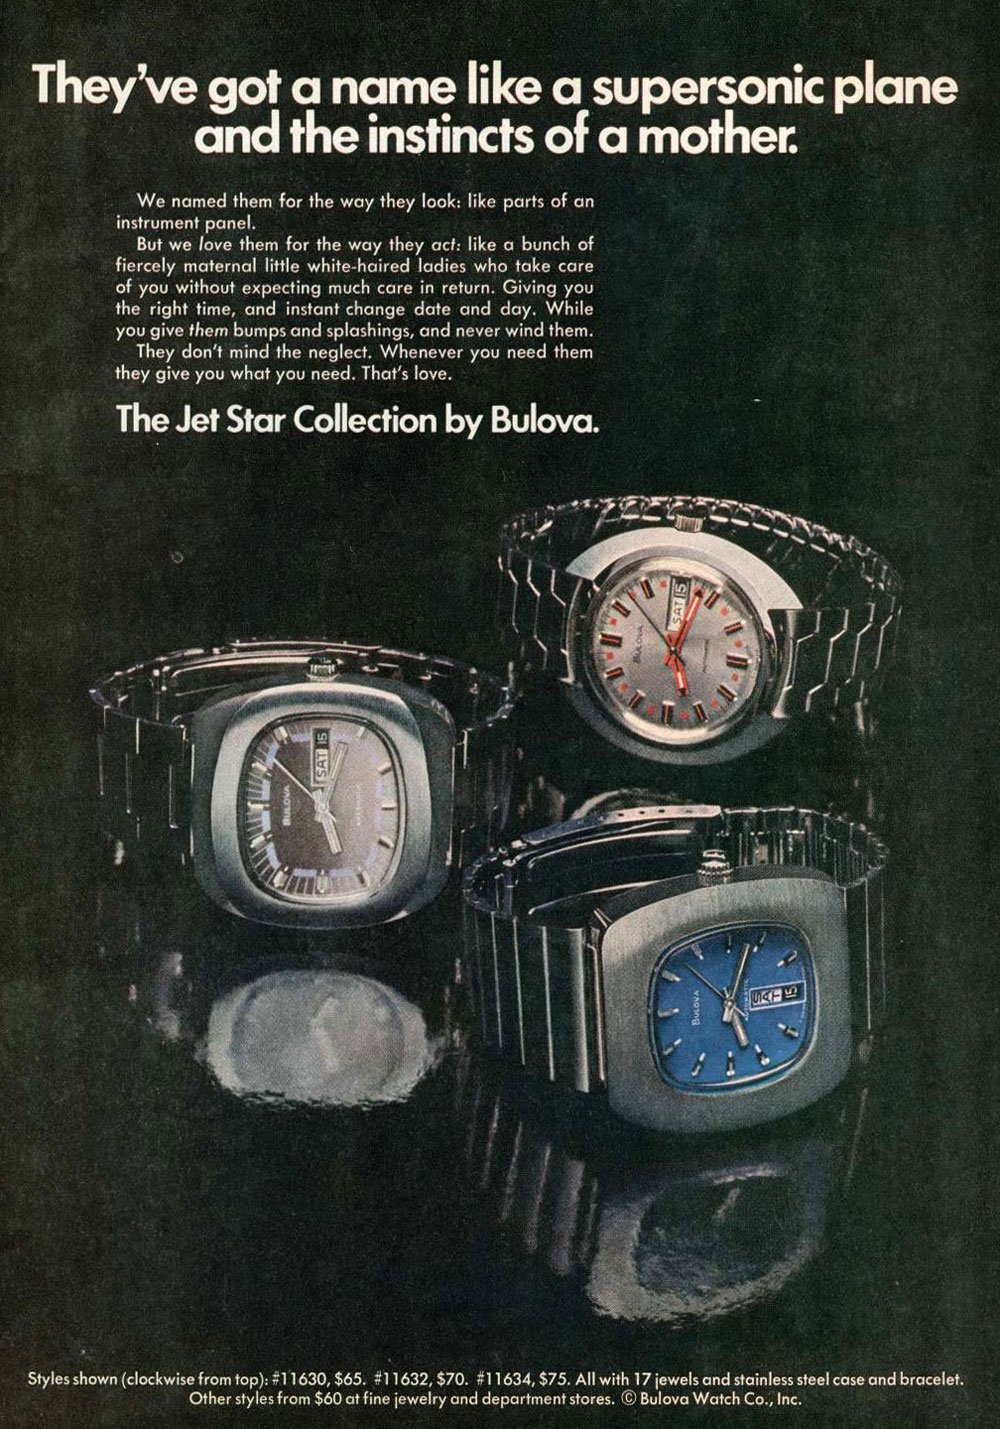 1973 Vintage Bulova Jet Star Collection Ad - Courtesy of Geoffrey Baker